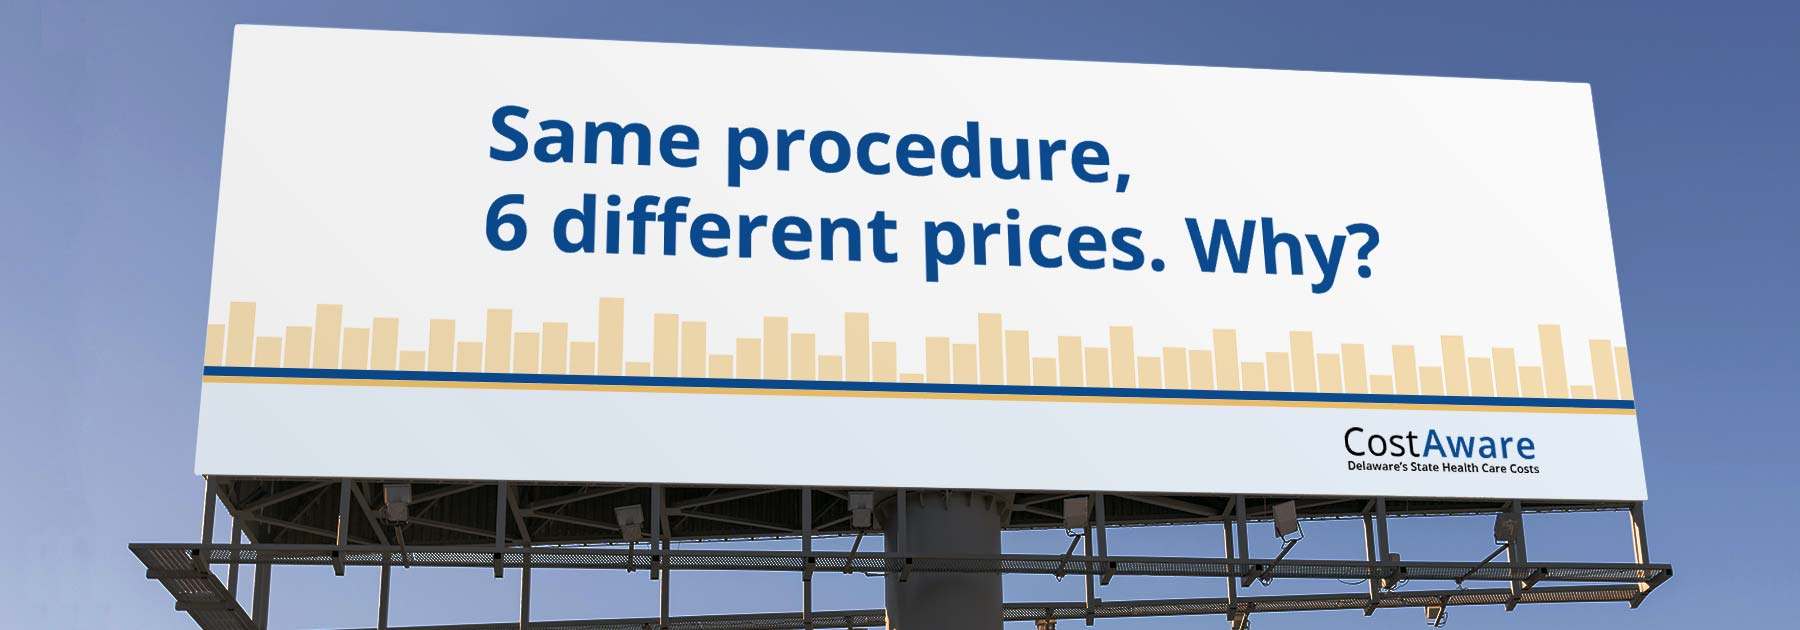 Billboard: Same procedure, 6 different prices. Why?